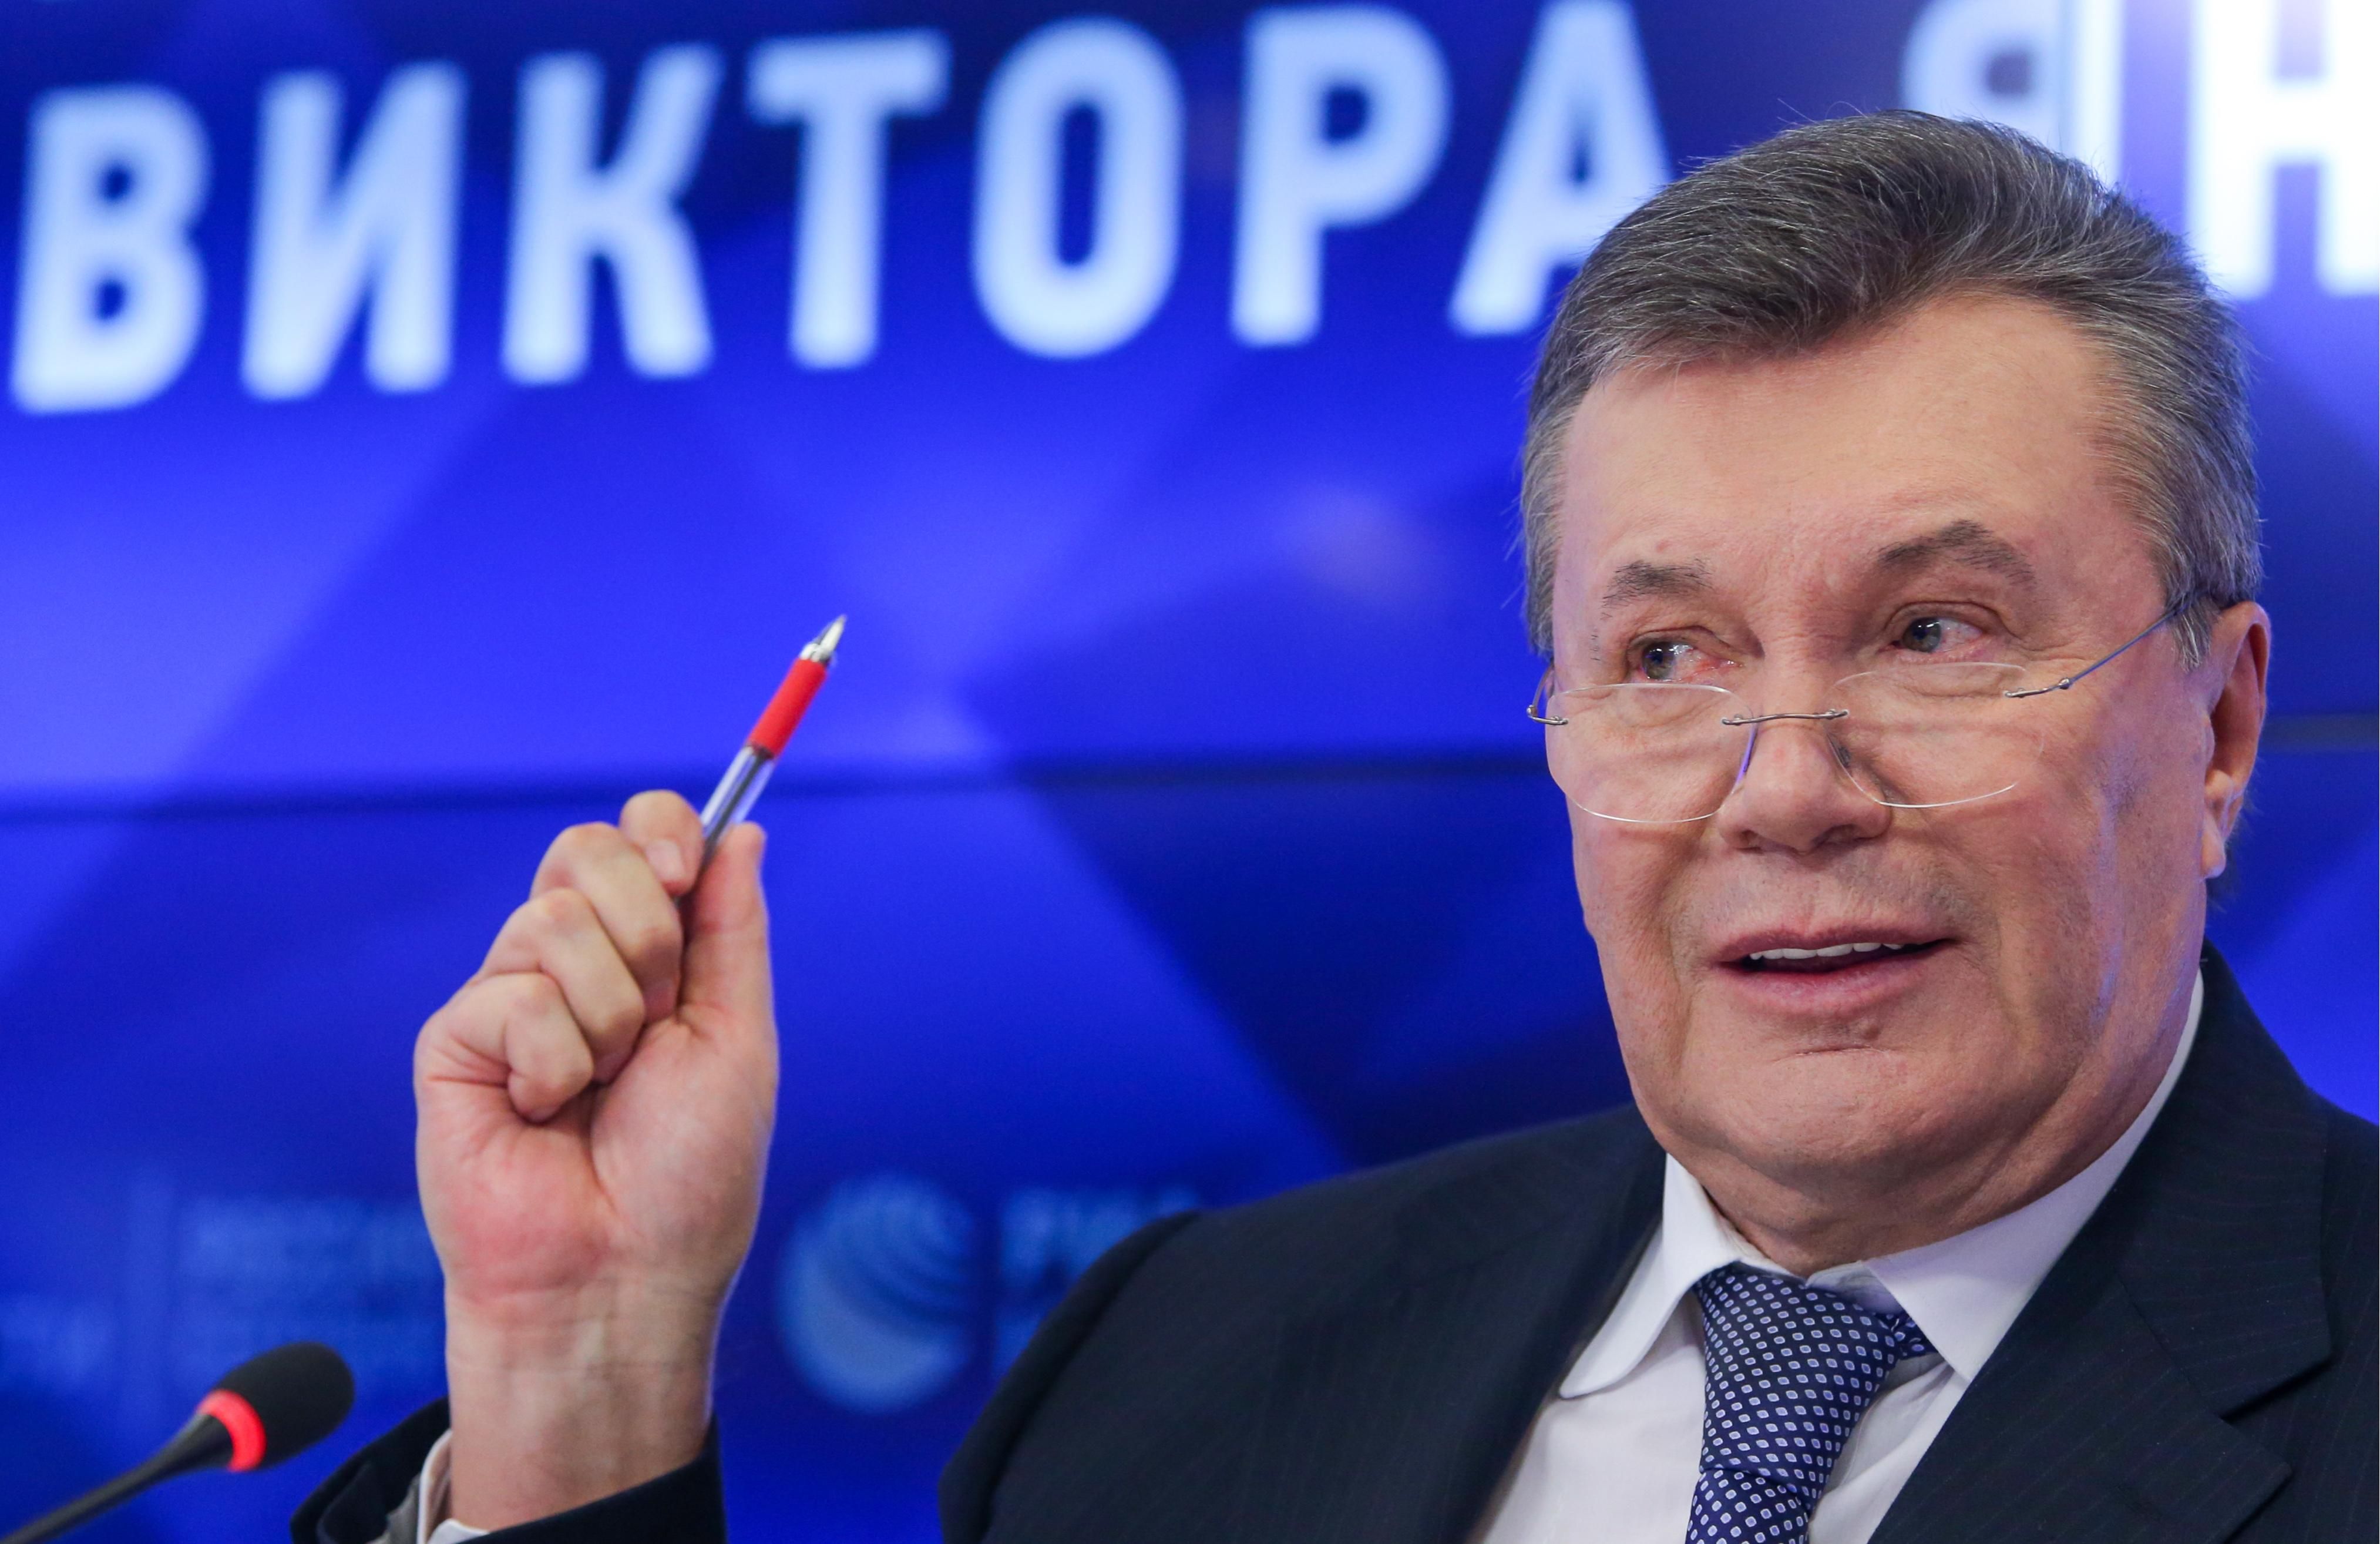 ЕС снял санкции с девяти человек из окружения Януковича за последние годы (исправлено)